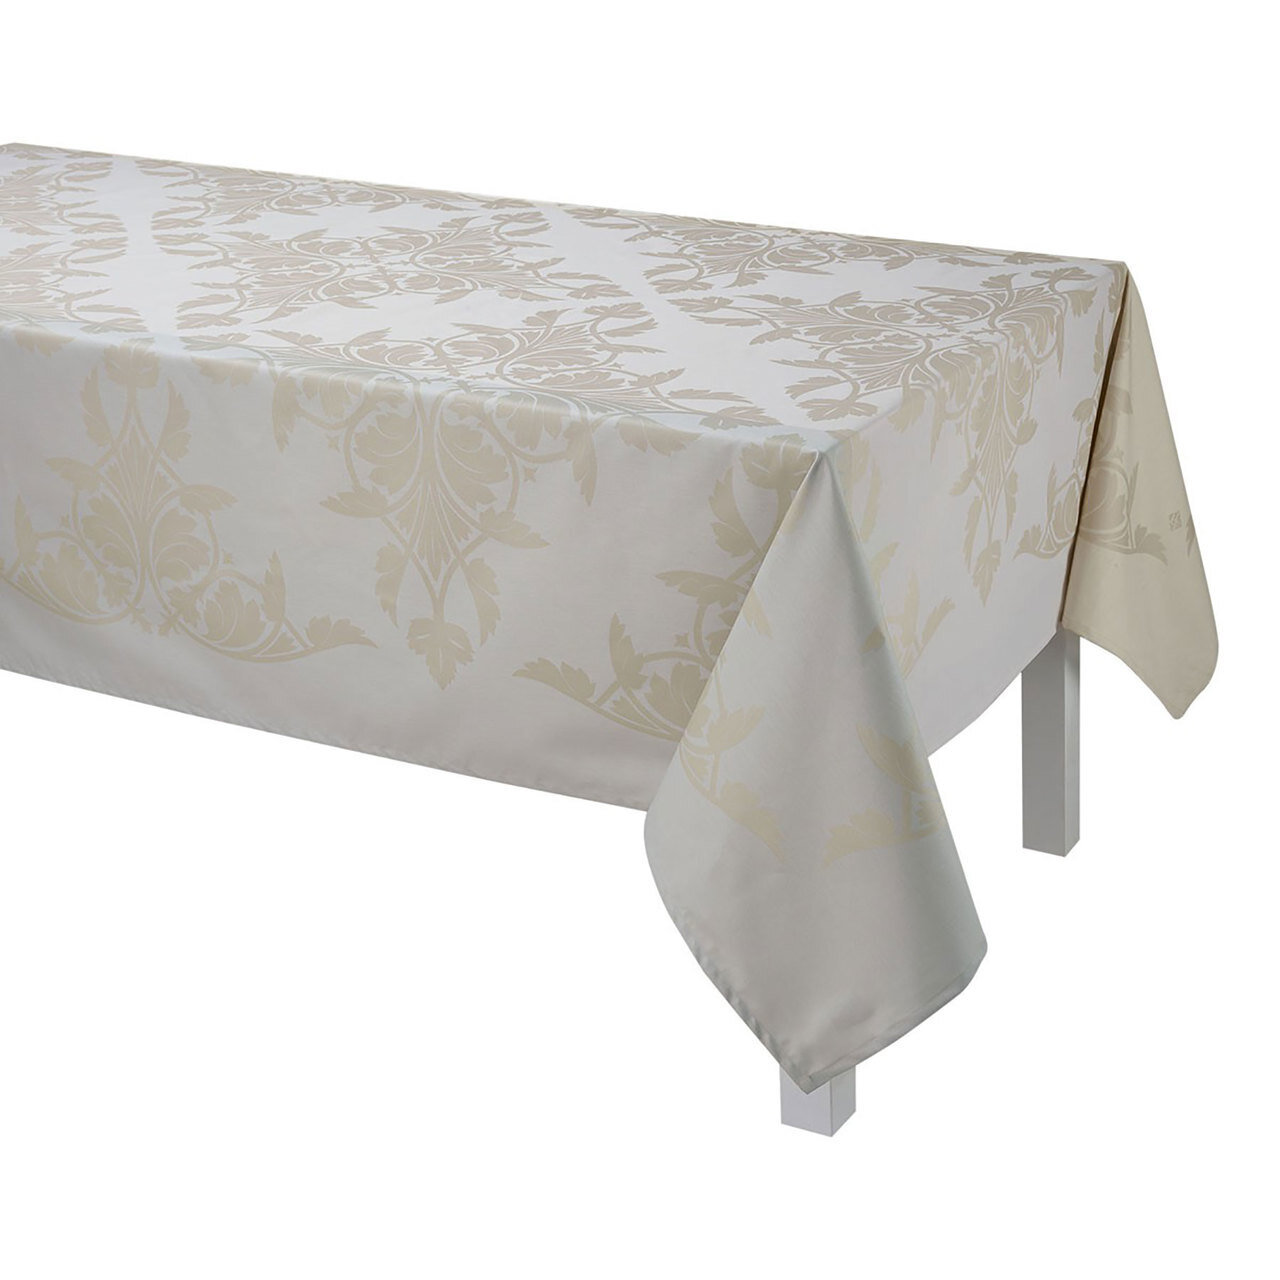 Le Jacquard Syracuse Beige Tablecloth 59x86